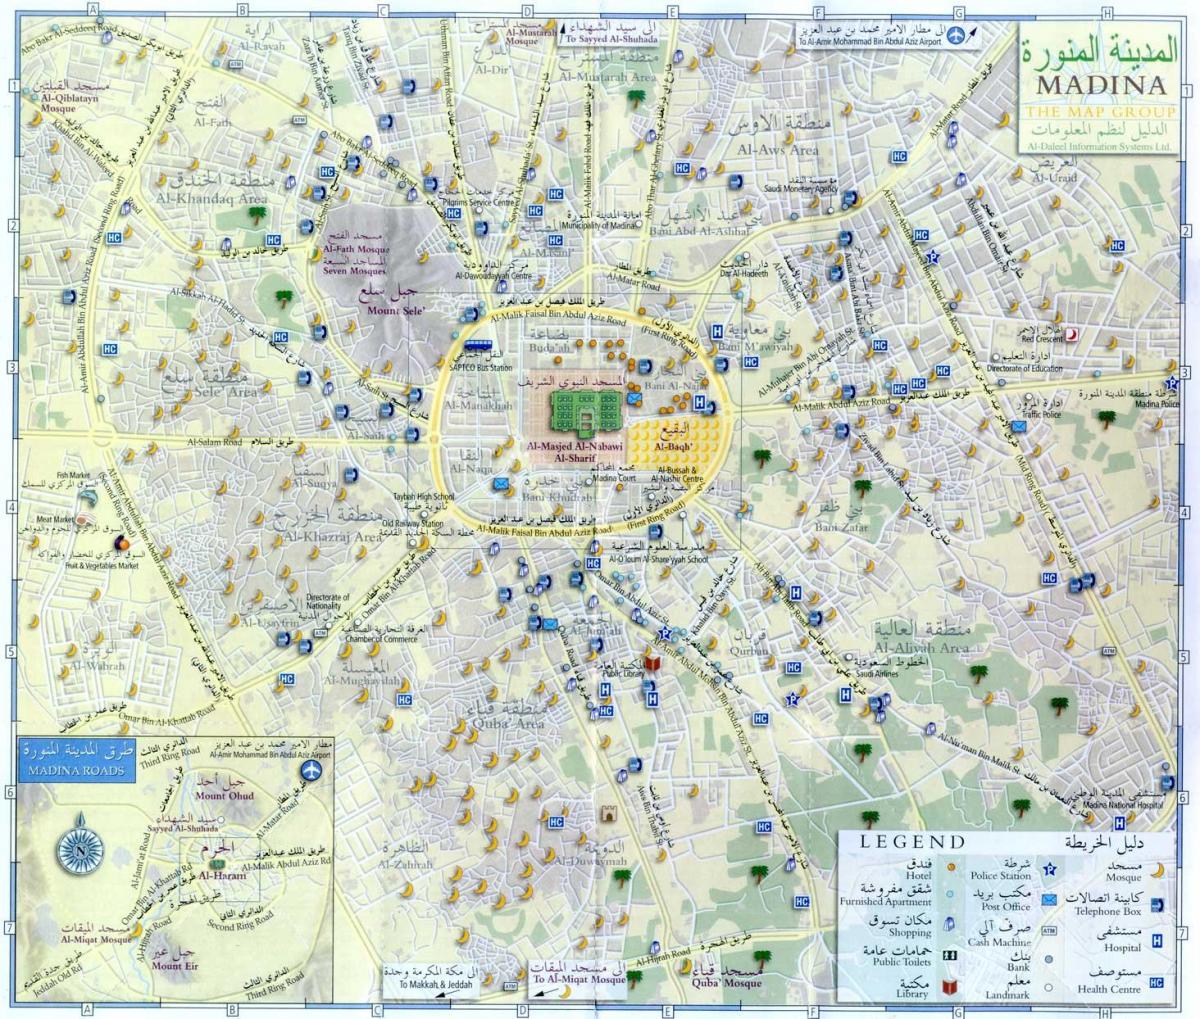 Mapa de las calles de La Meca (Makkah)